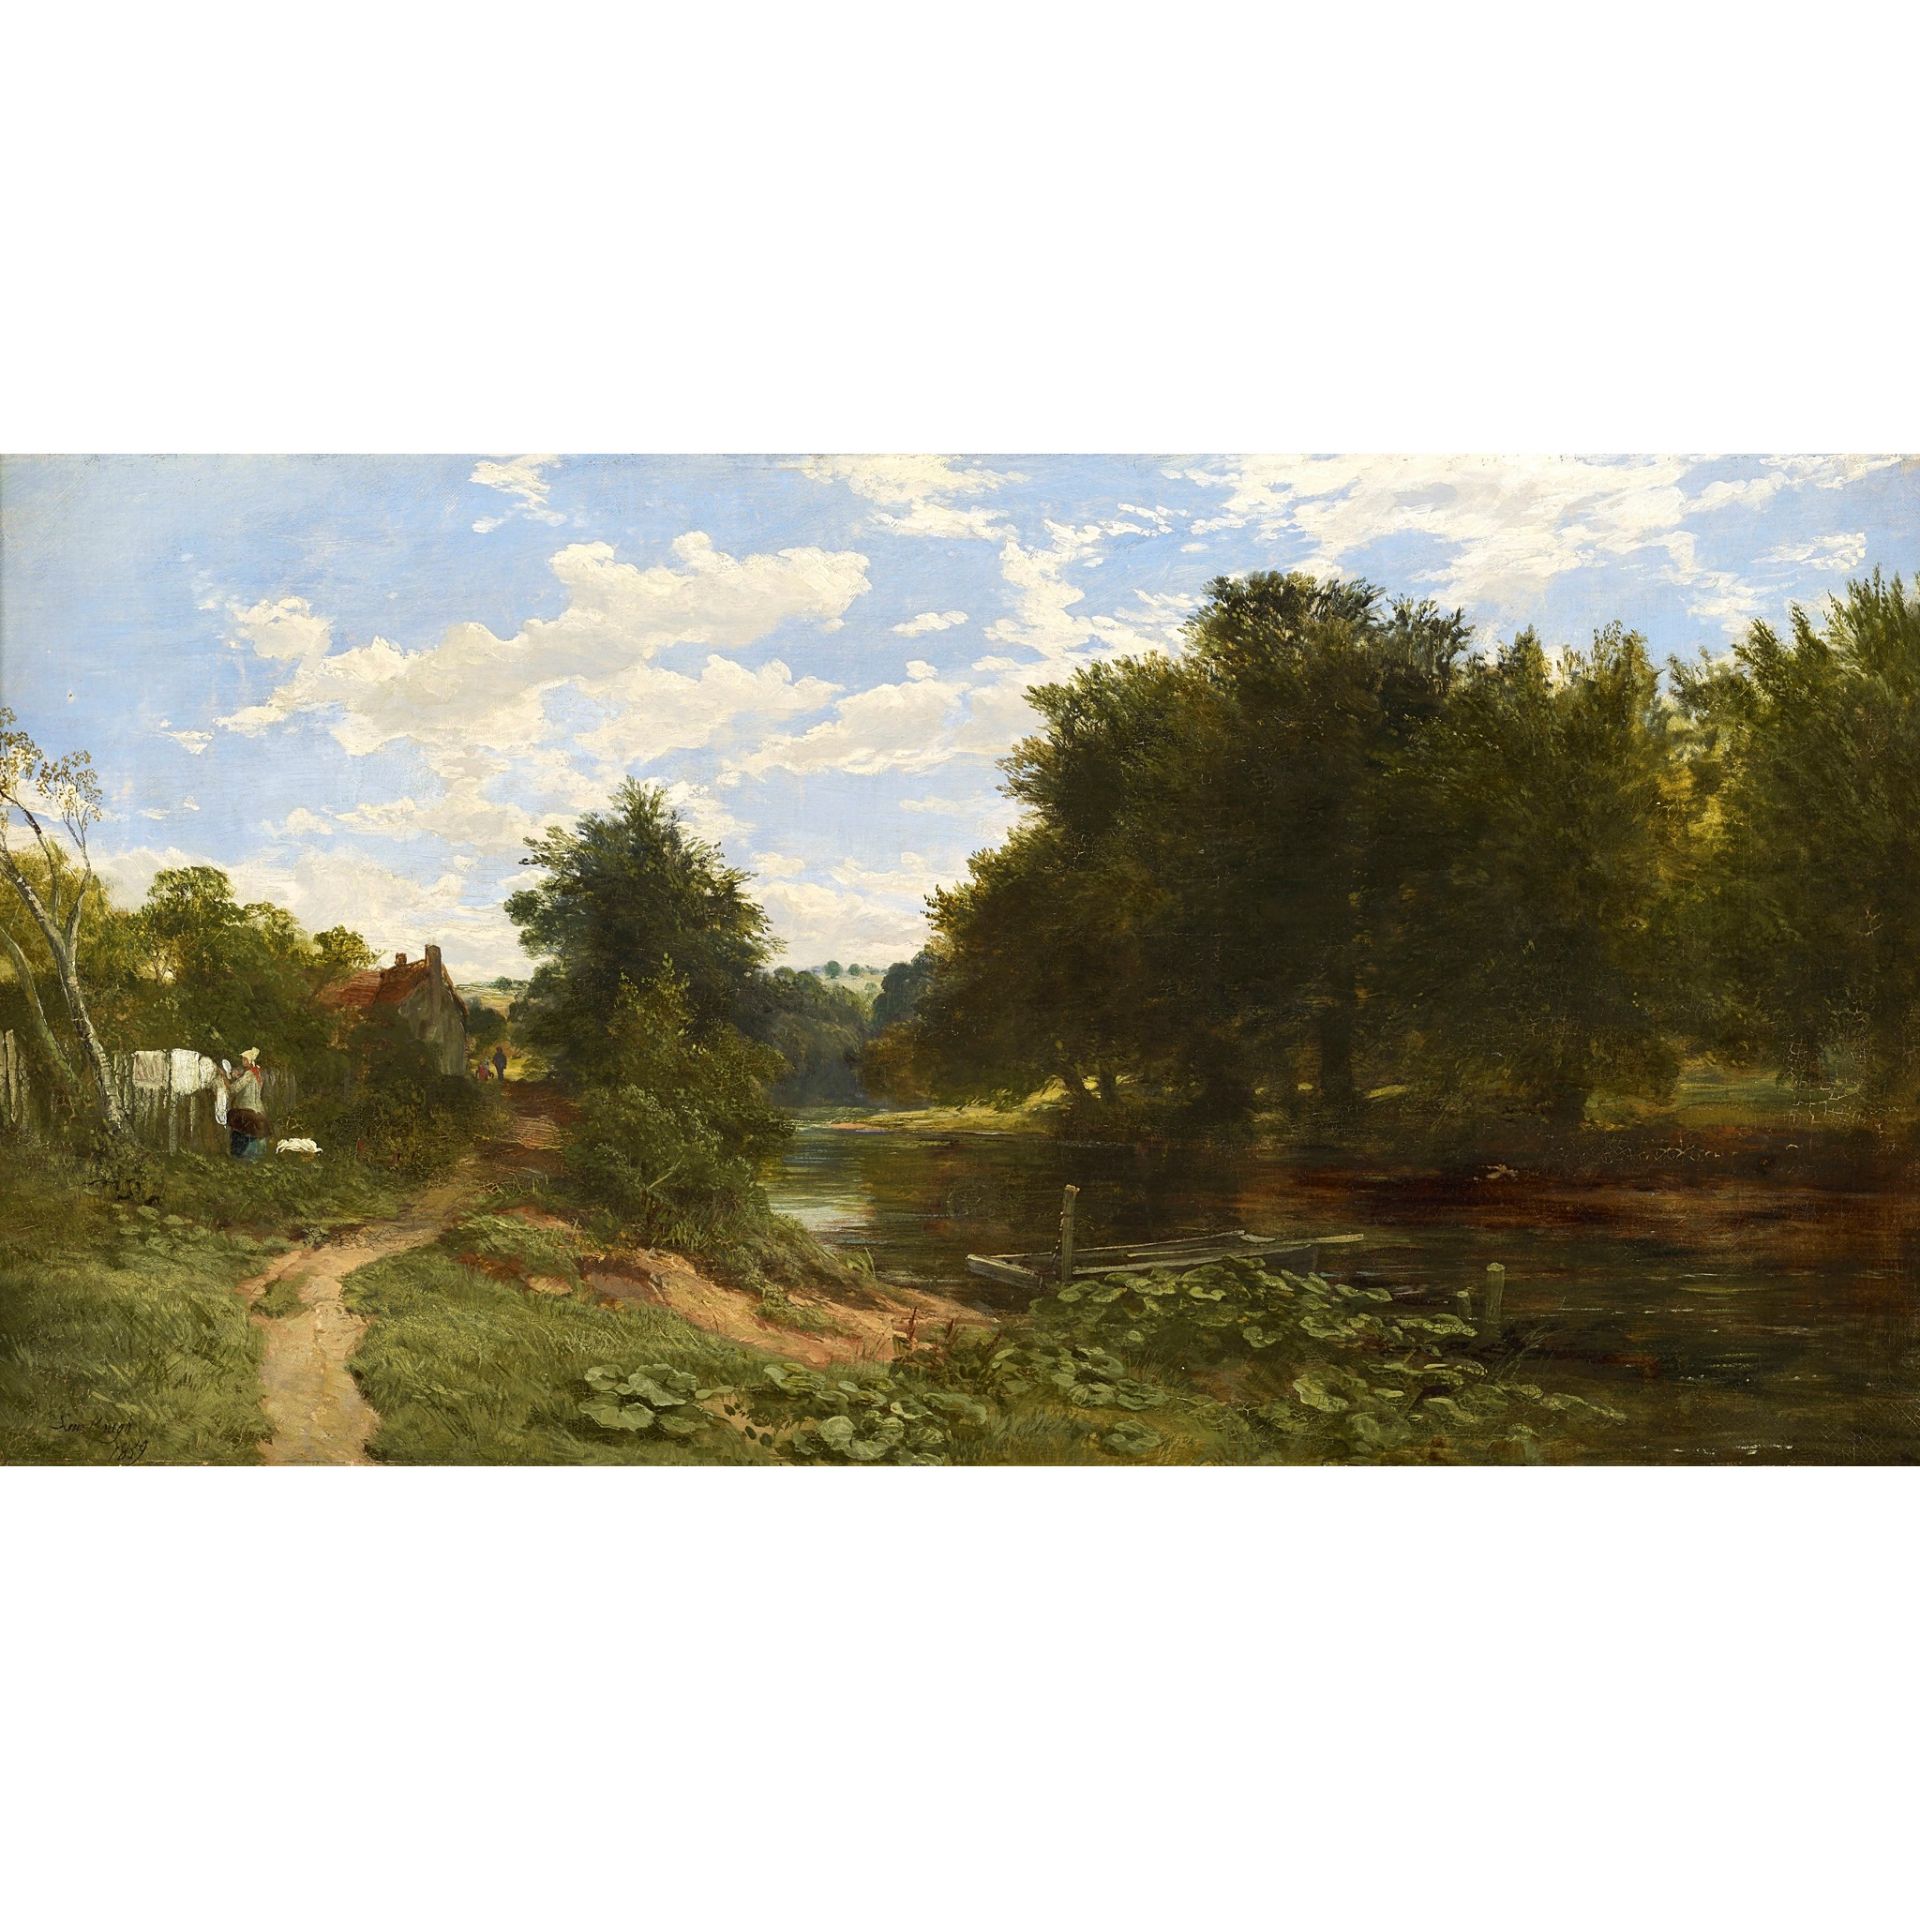 SAM BOUGH R.S.A, R.S.W. (SCOTTISH 1822-1878) ON THE RIVER ALMOND, NEAR CRAMOND